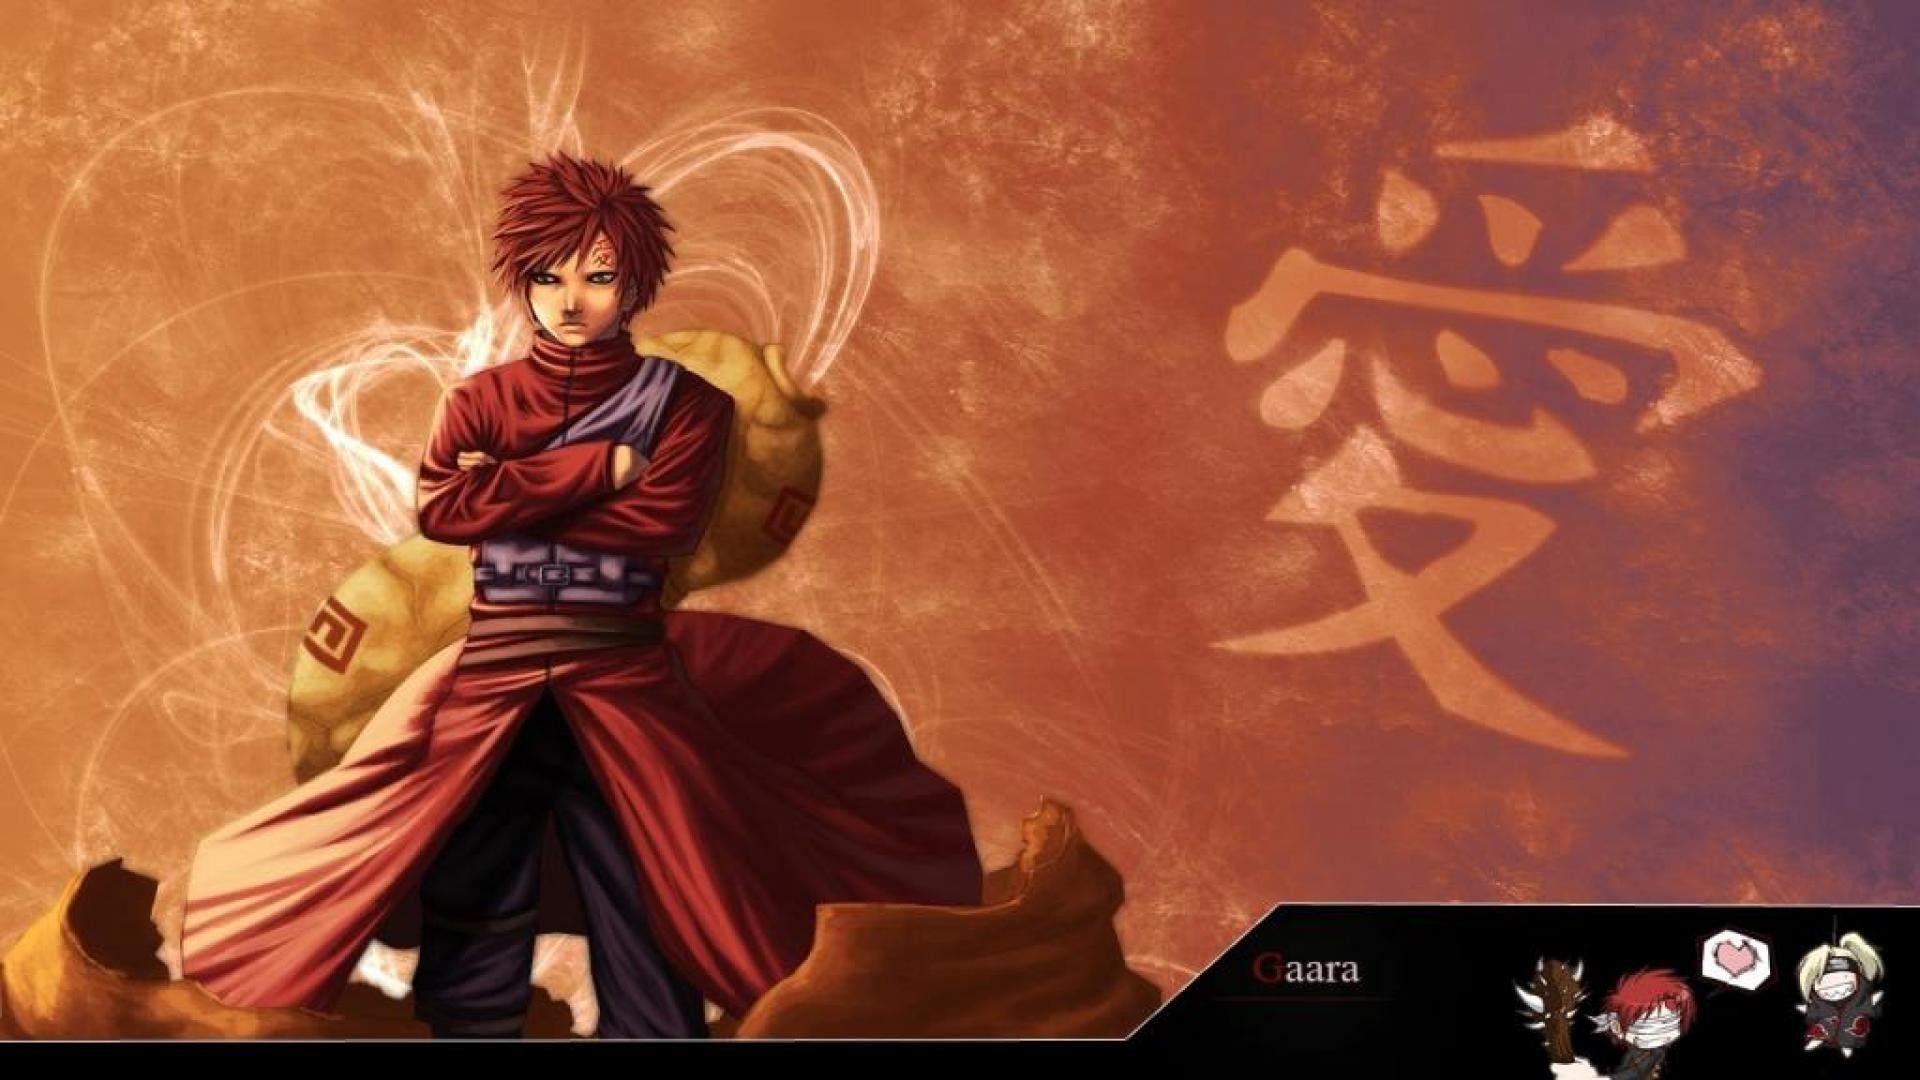 110+ Gaara (Naruto) HD Wallpapers and Backgrounds